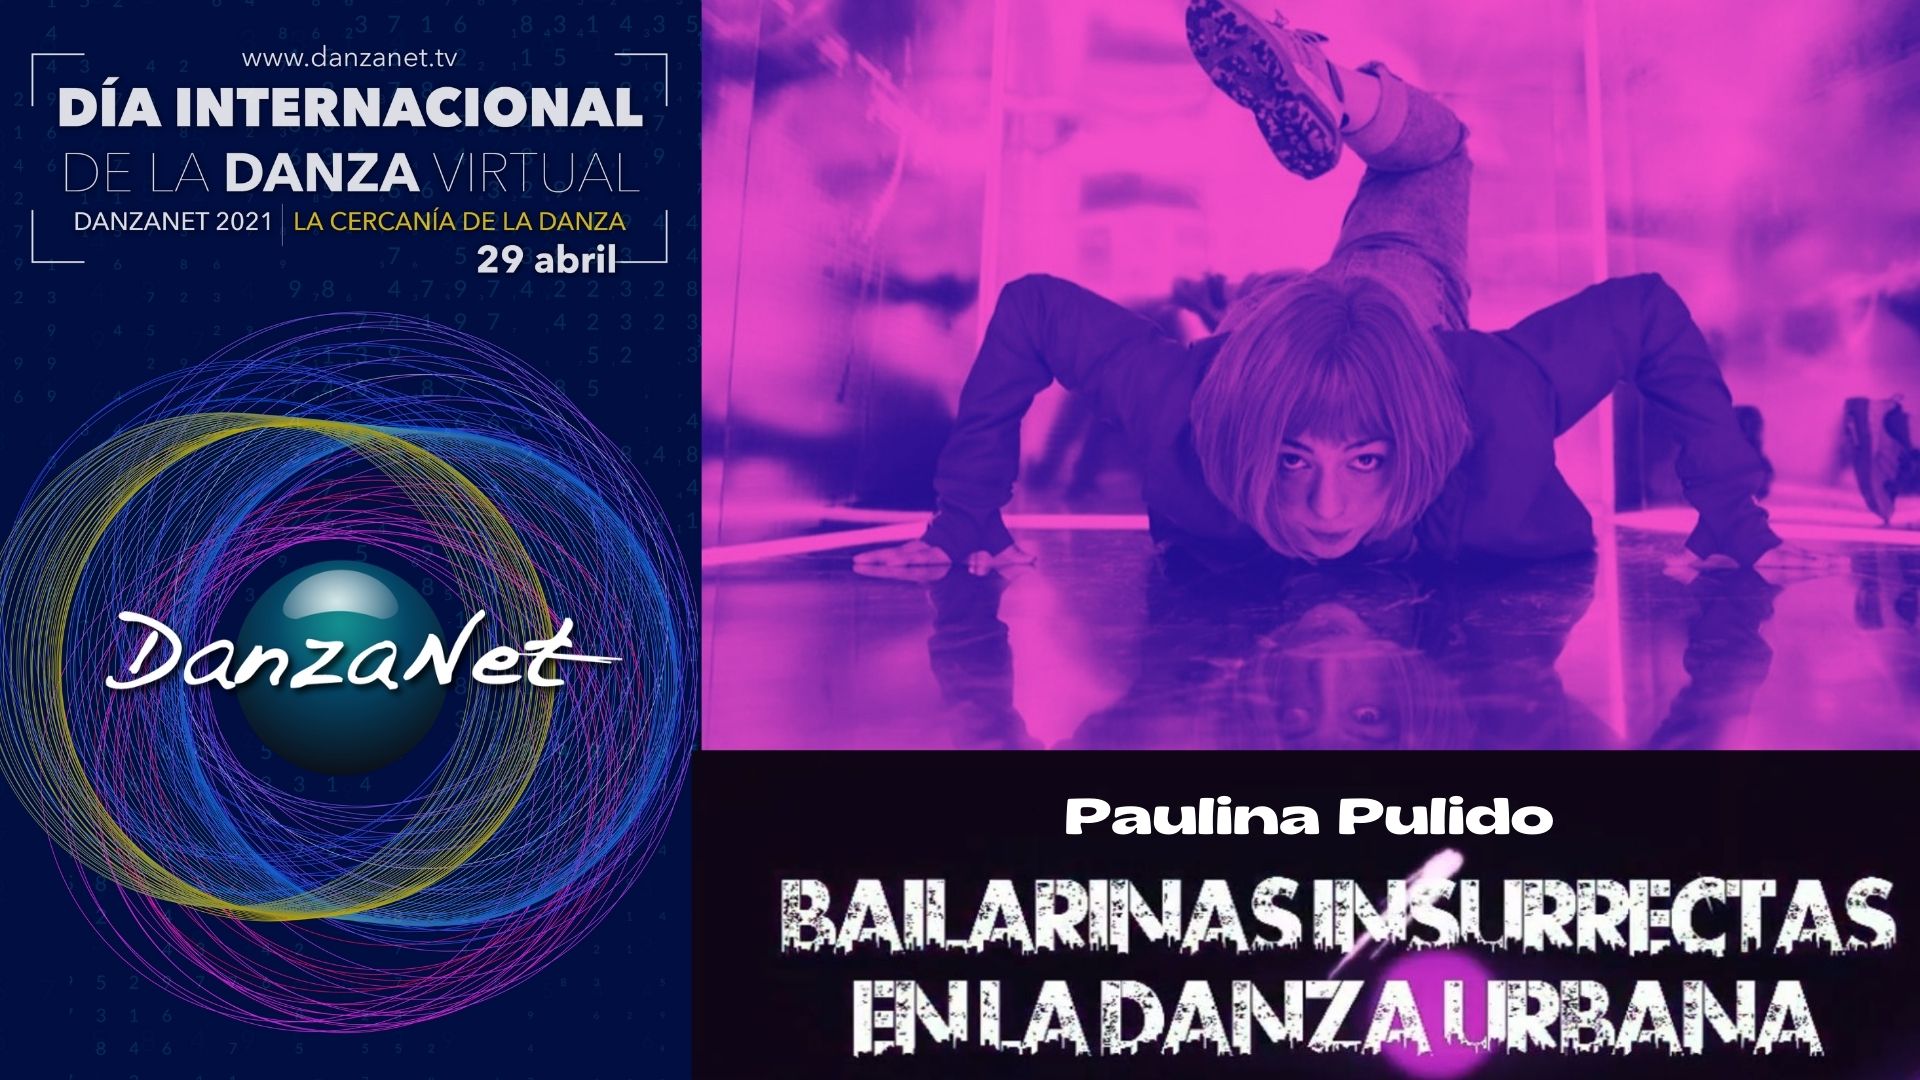 BAILARINAS INSURRECTAS Paulina Pulido